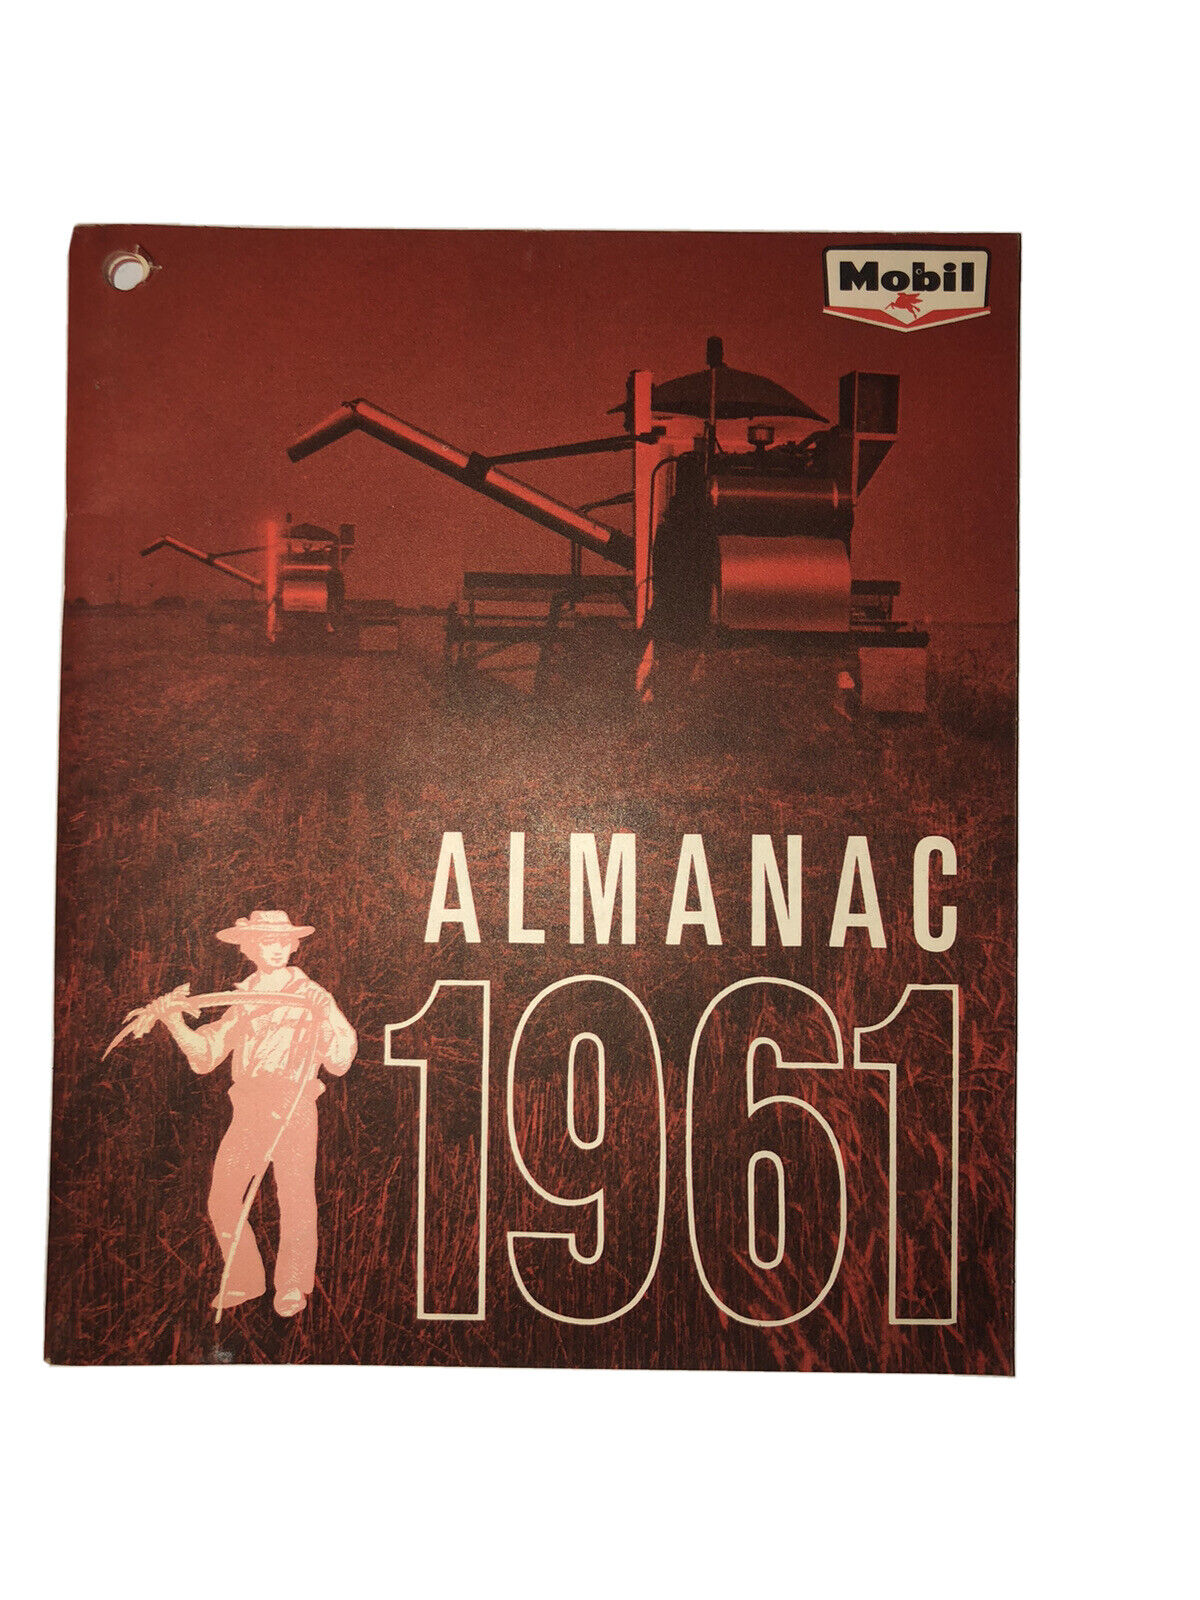 1961 Mobil Oil Company Almanac book guide/calendar